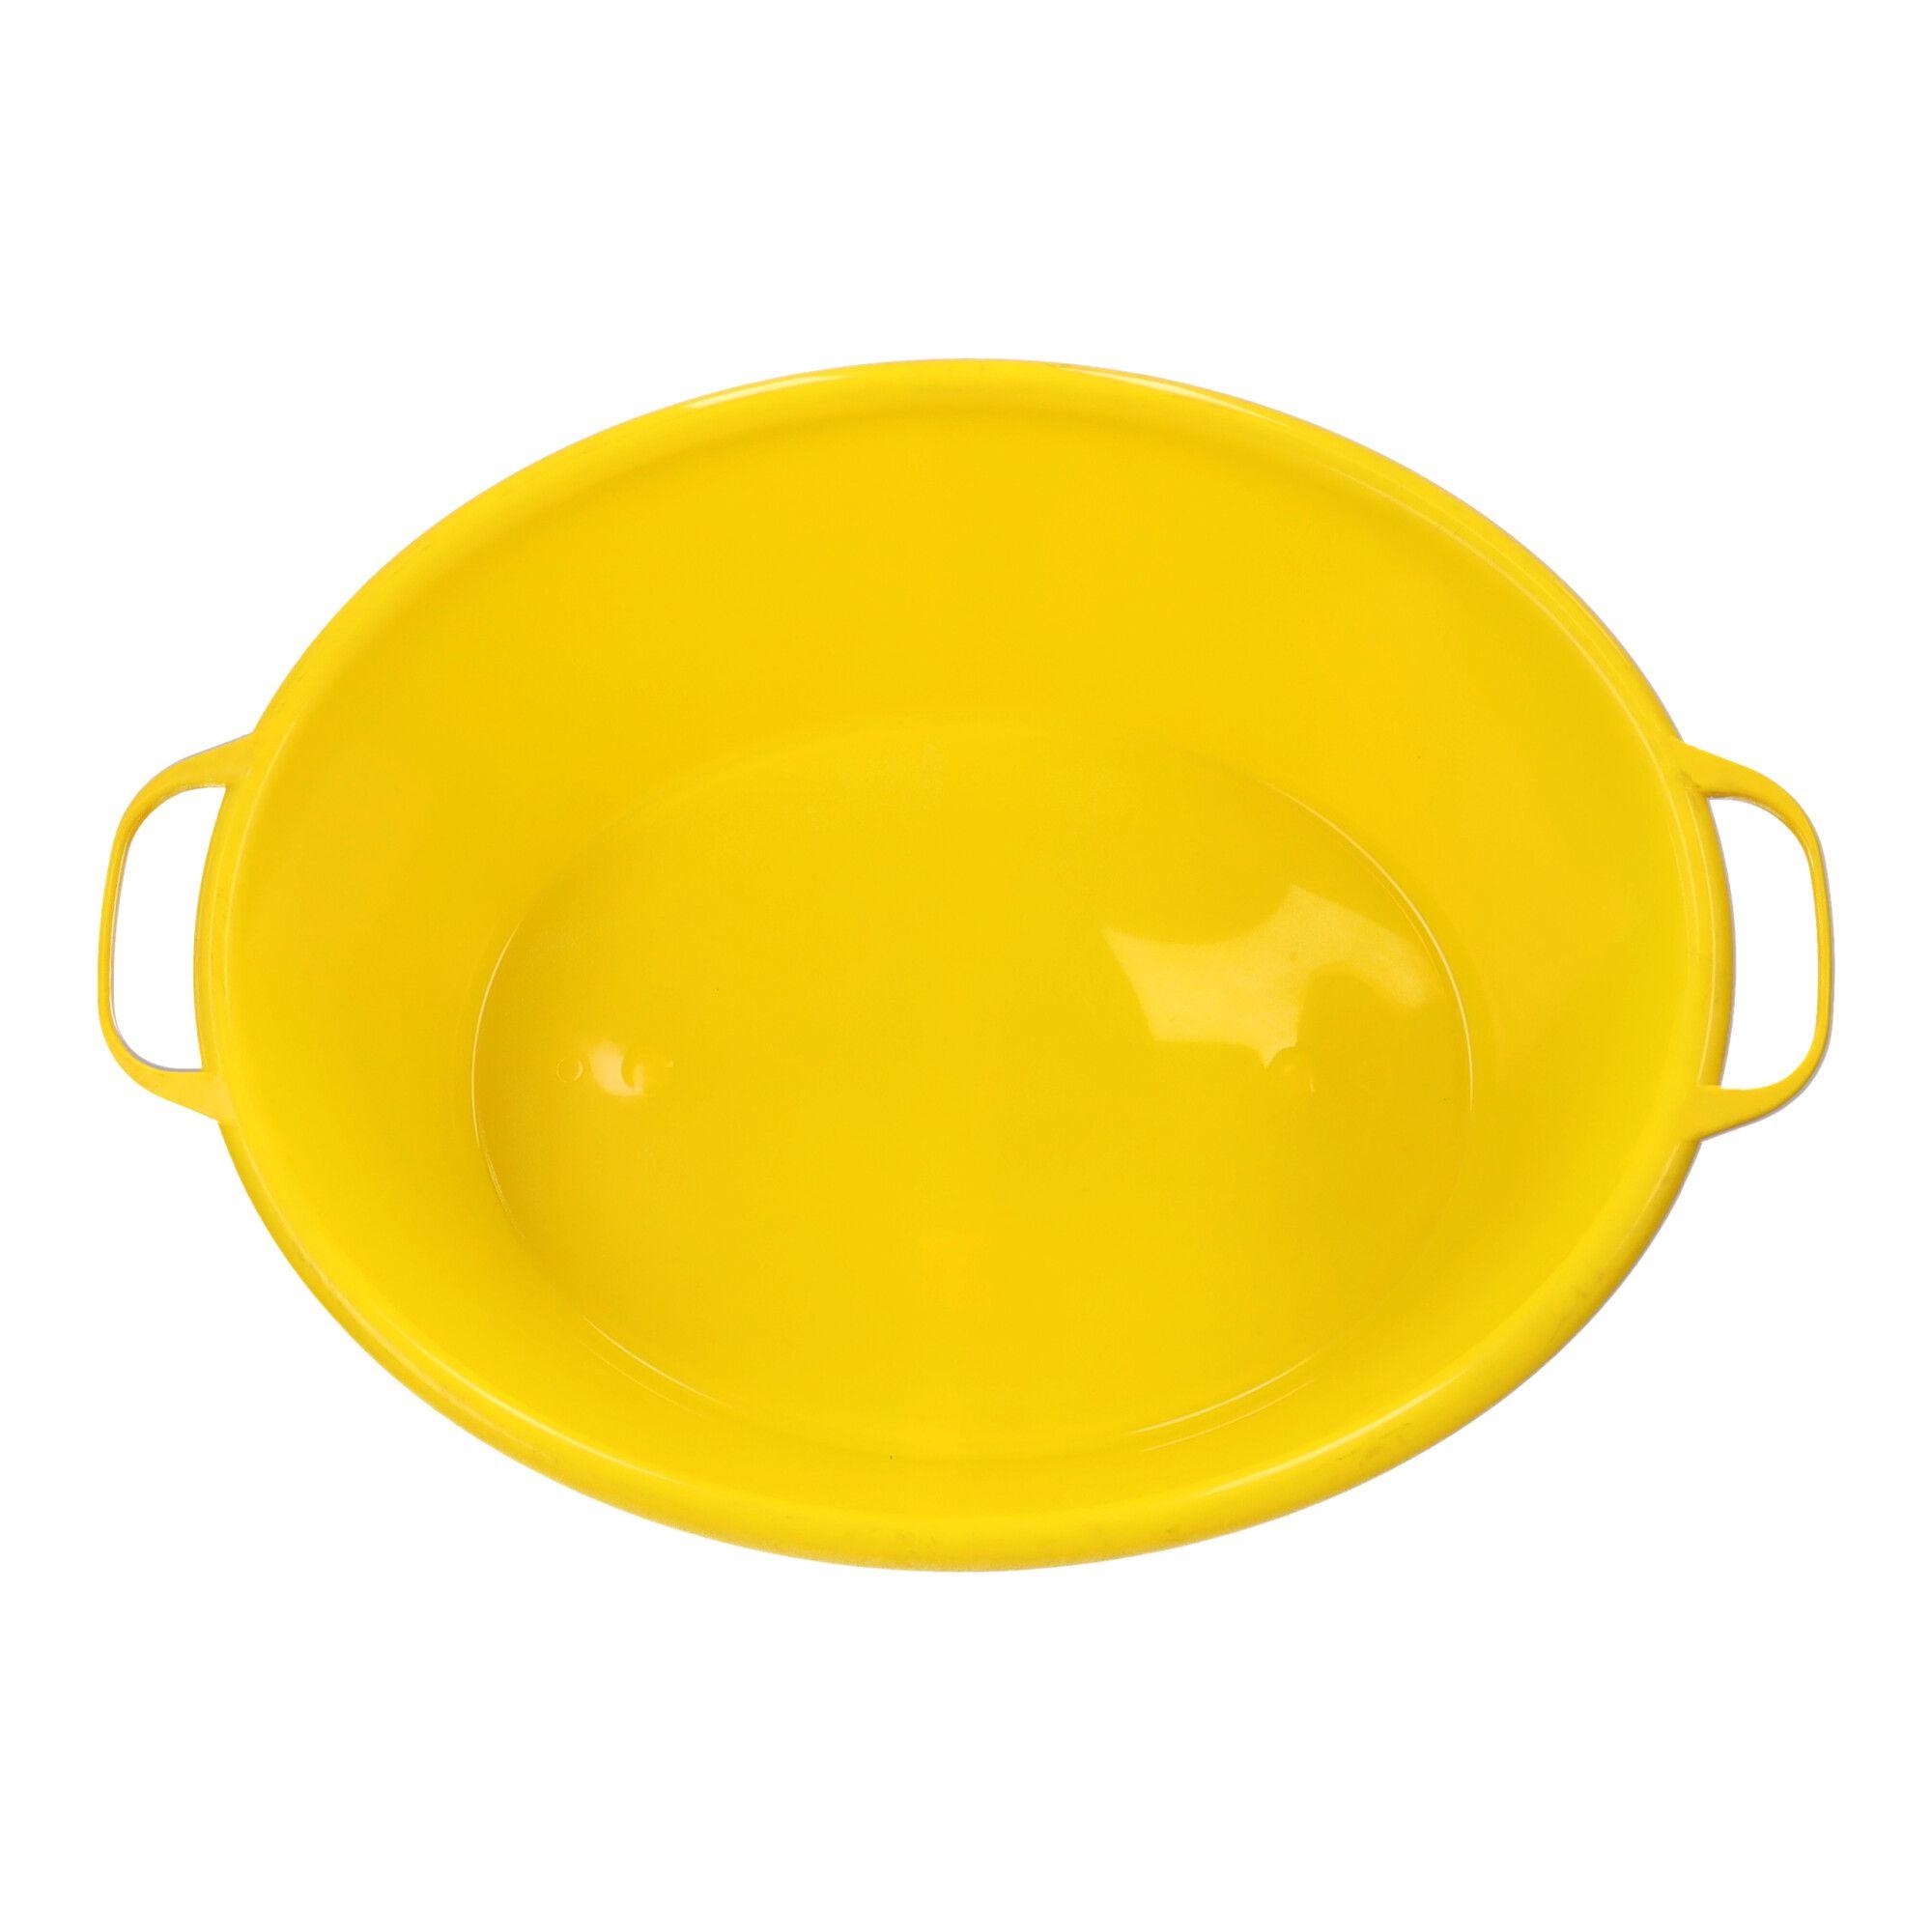 Oval bowl 30L, POLISH PRODUCT